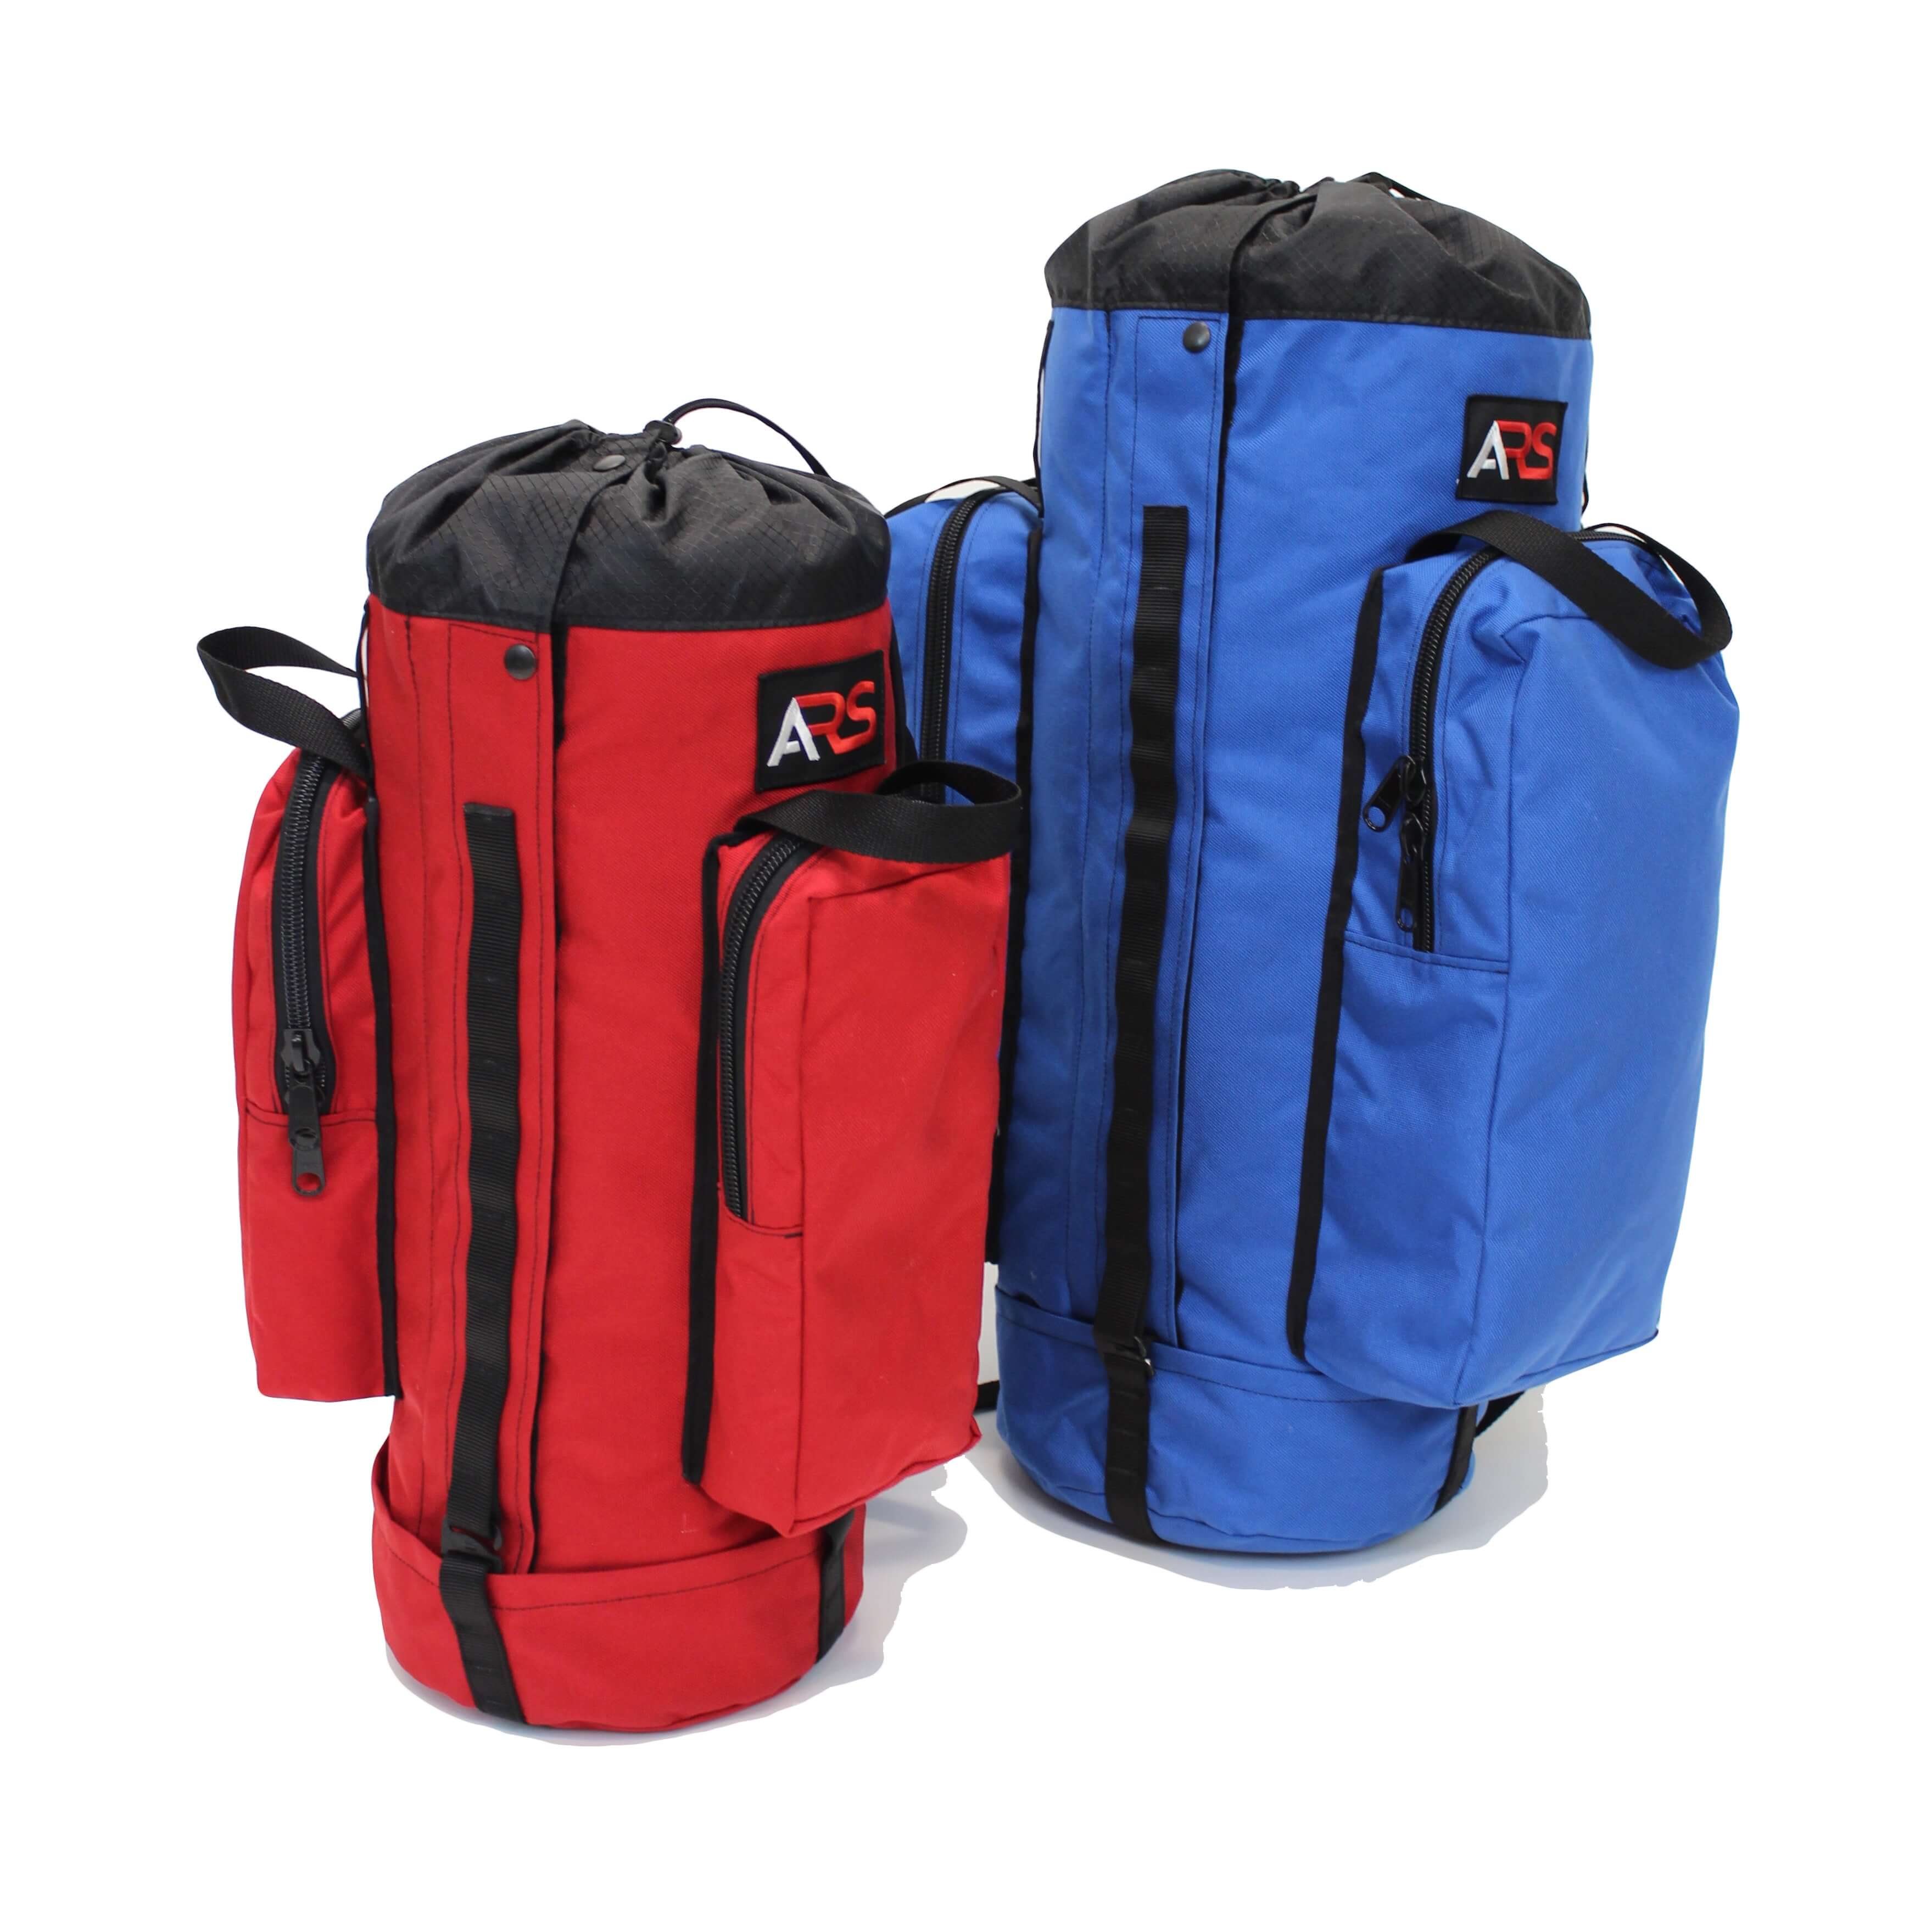 Breakout packaway backpack | Palm Equipment